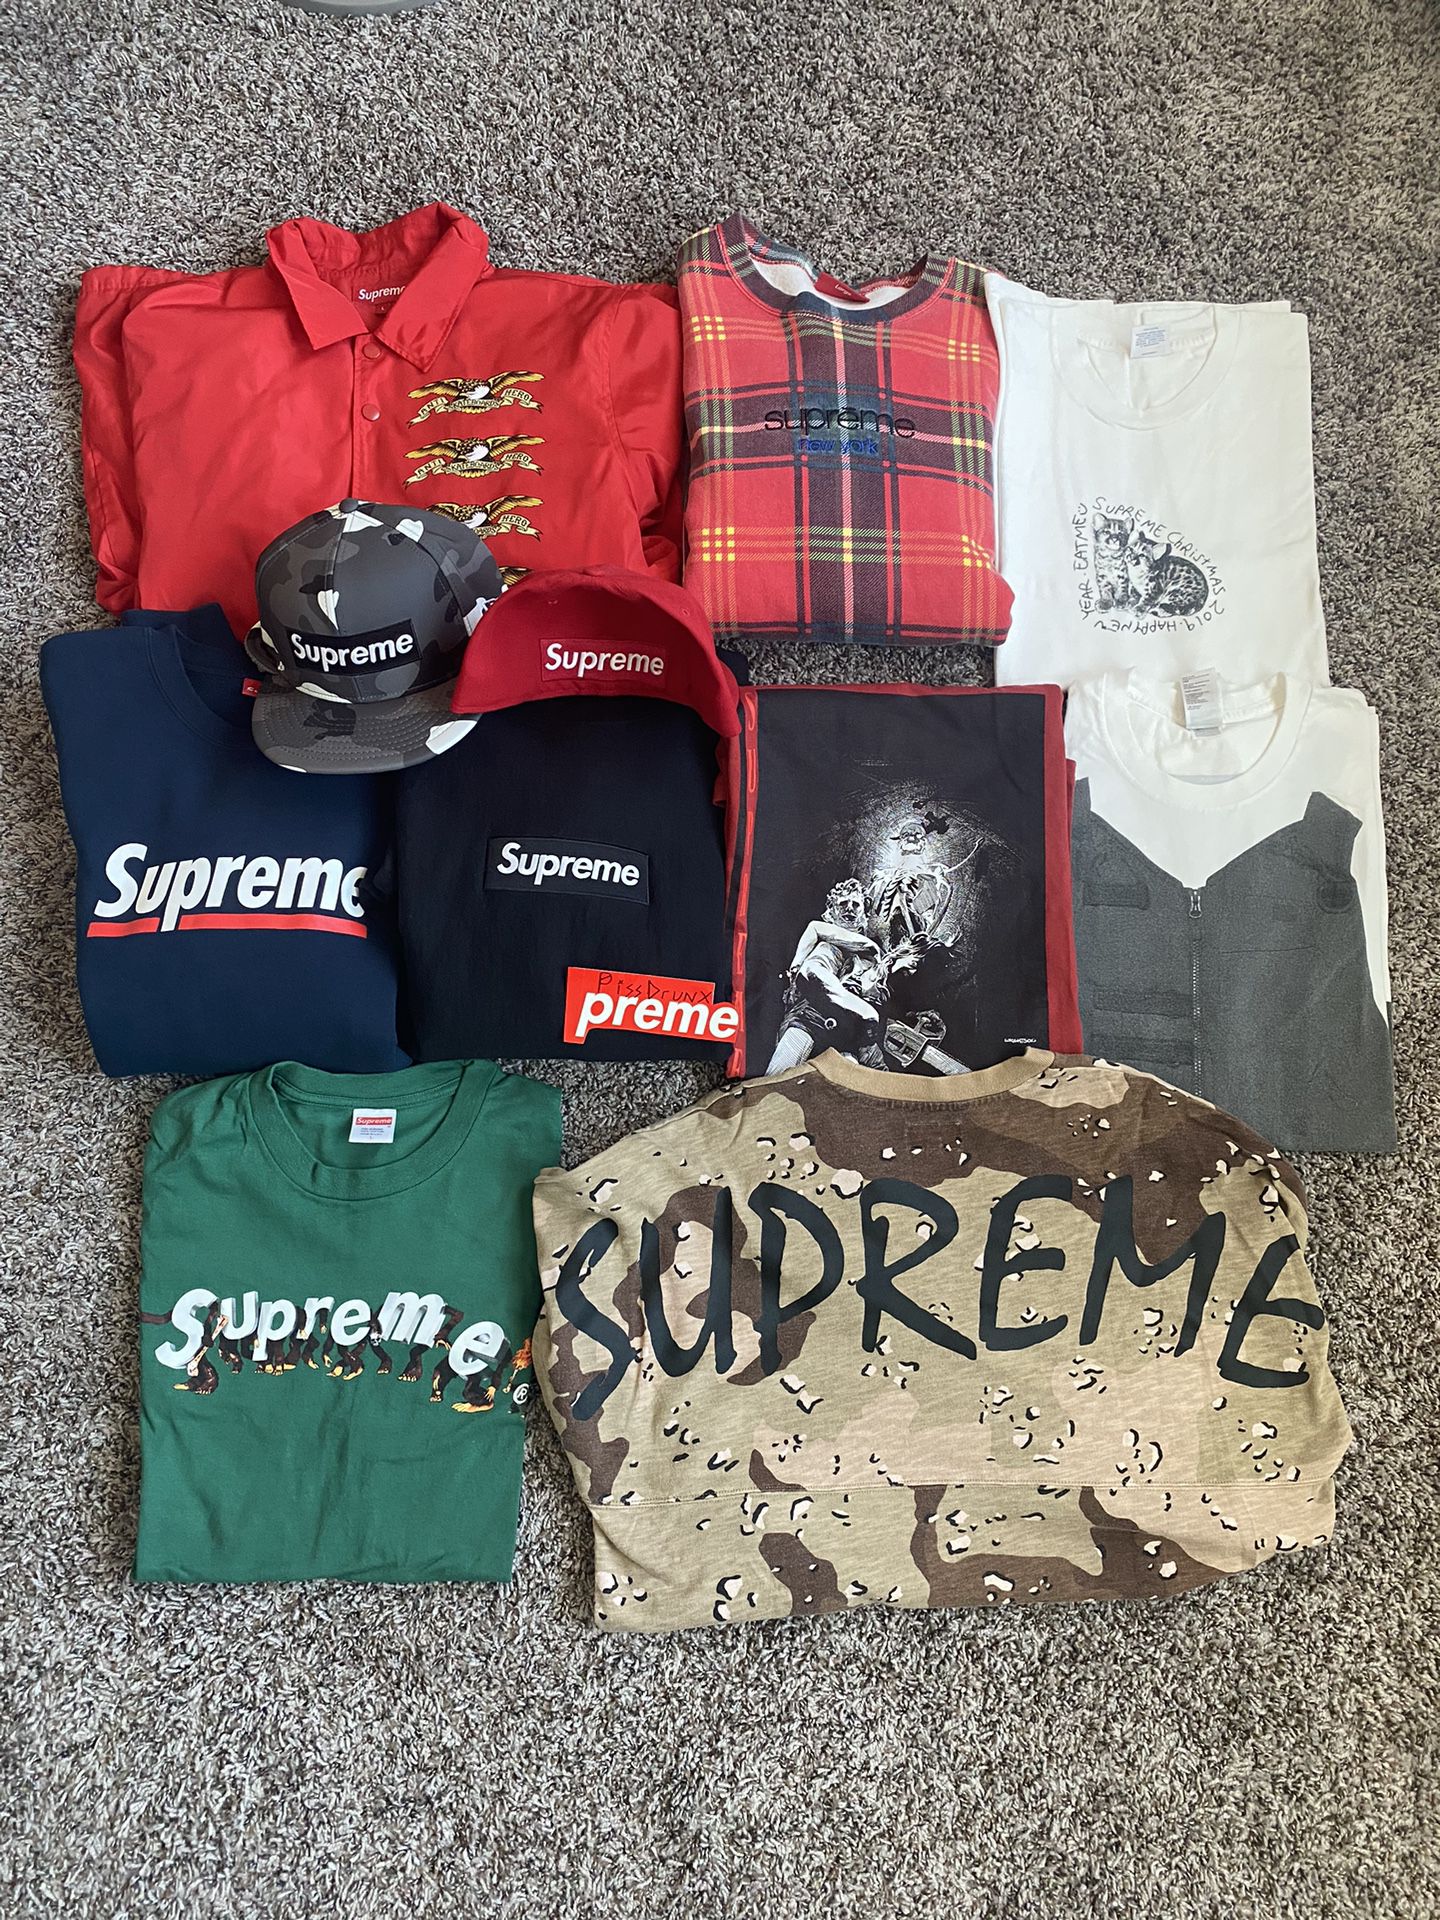 Supreme Crewnecks, Tees, Hats, Box Logo, Anti-hero Jacket, New Eras Mostly Large $40-275